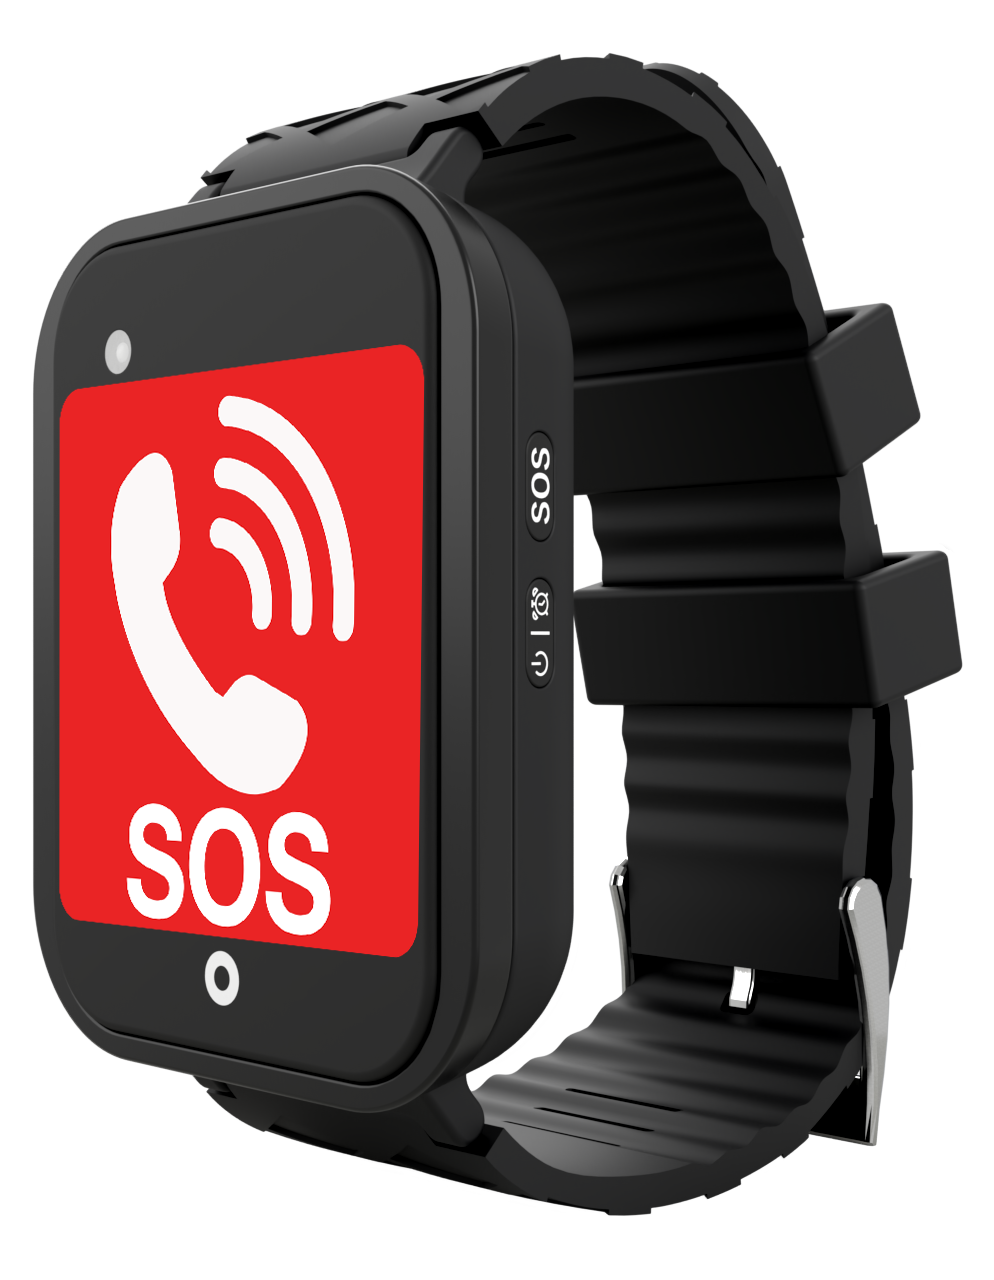 SecuLife Smartwatch SOS left